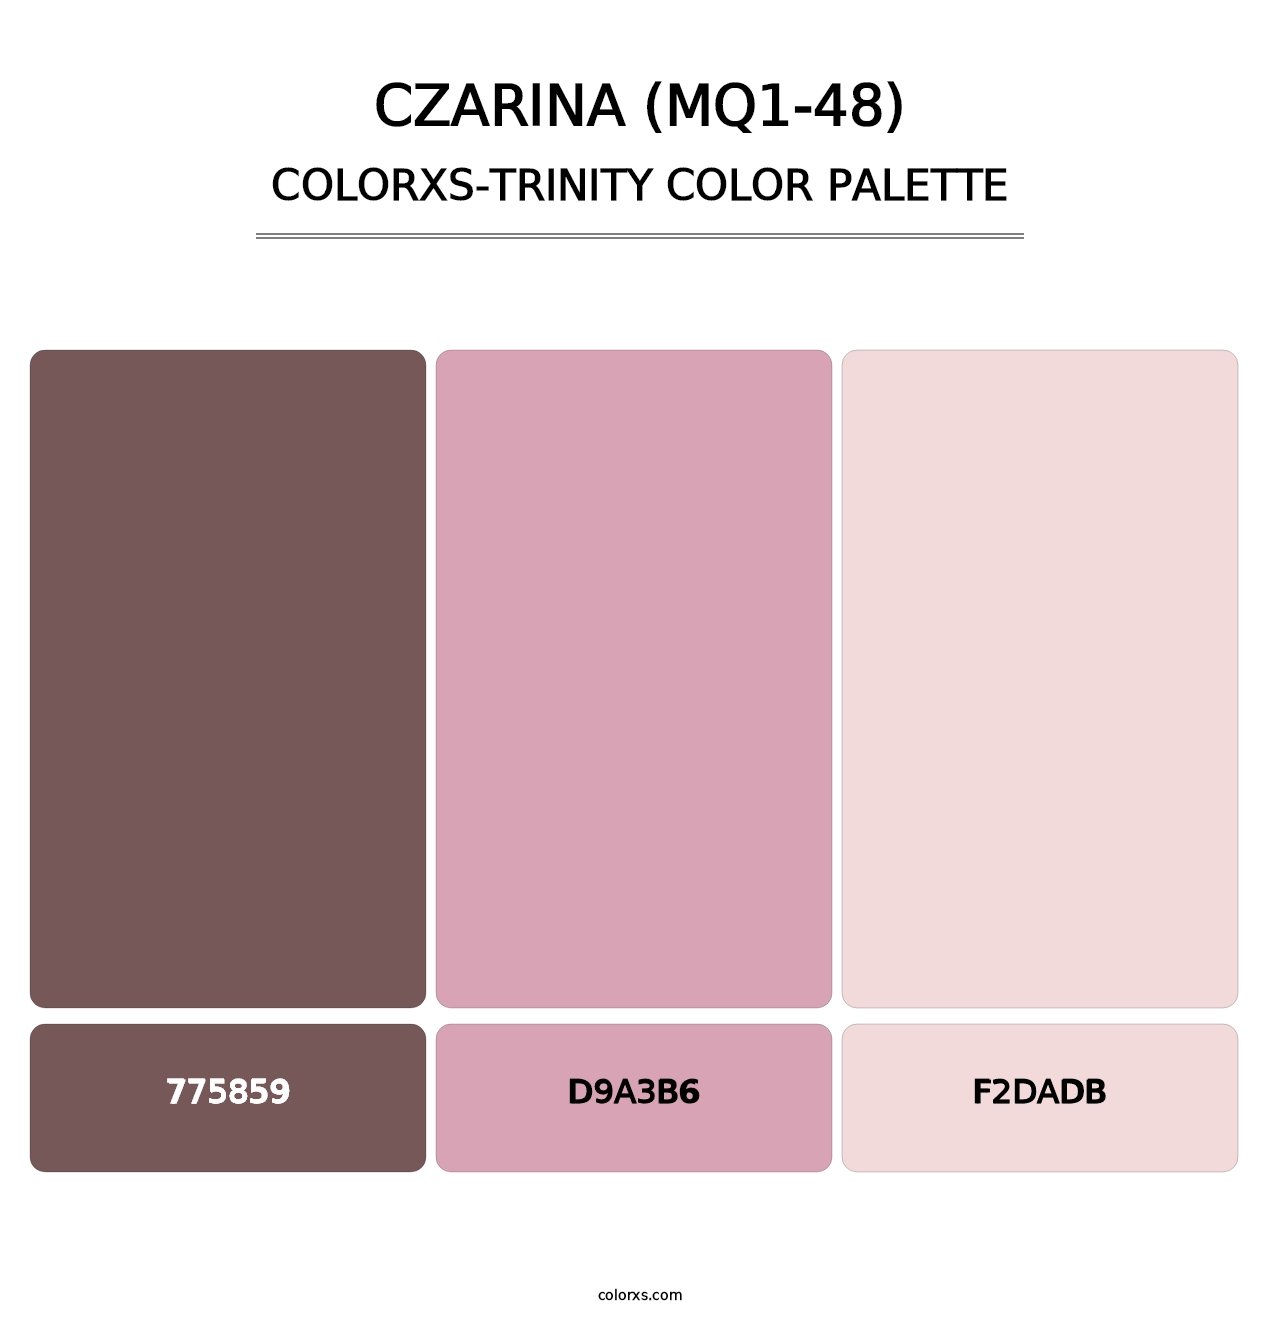 Czarina (MQ1-48) - Colorxs Trinity Palette